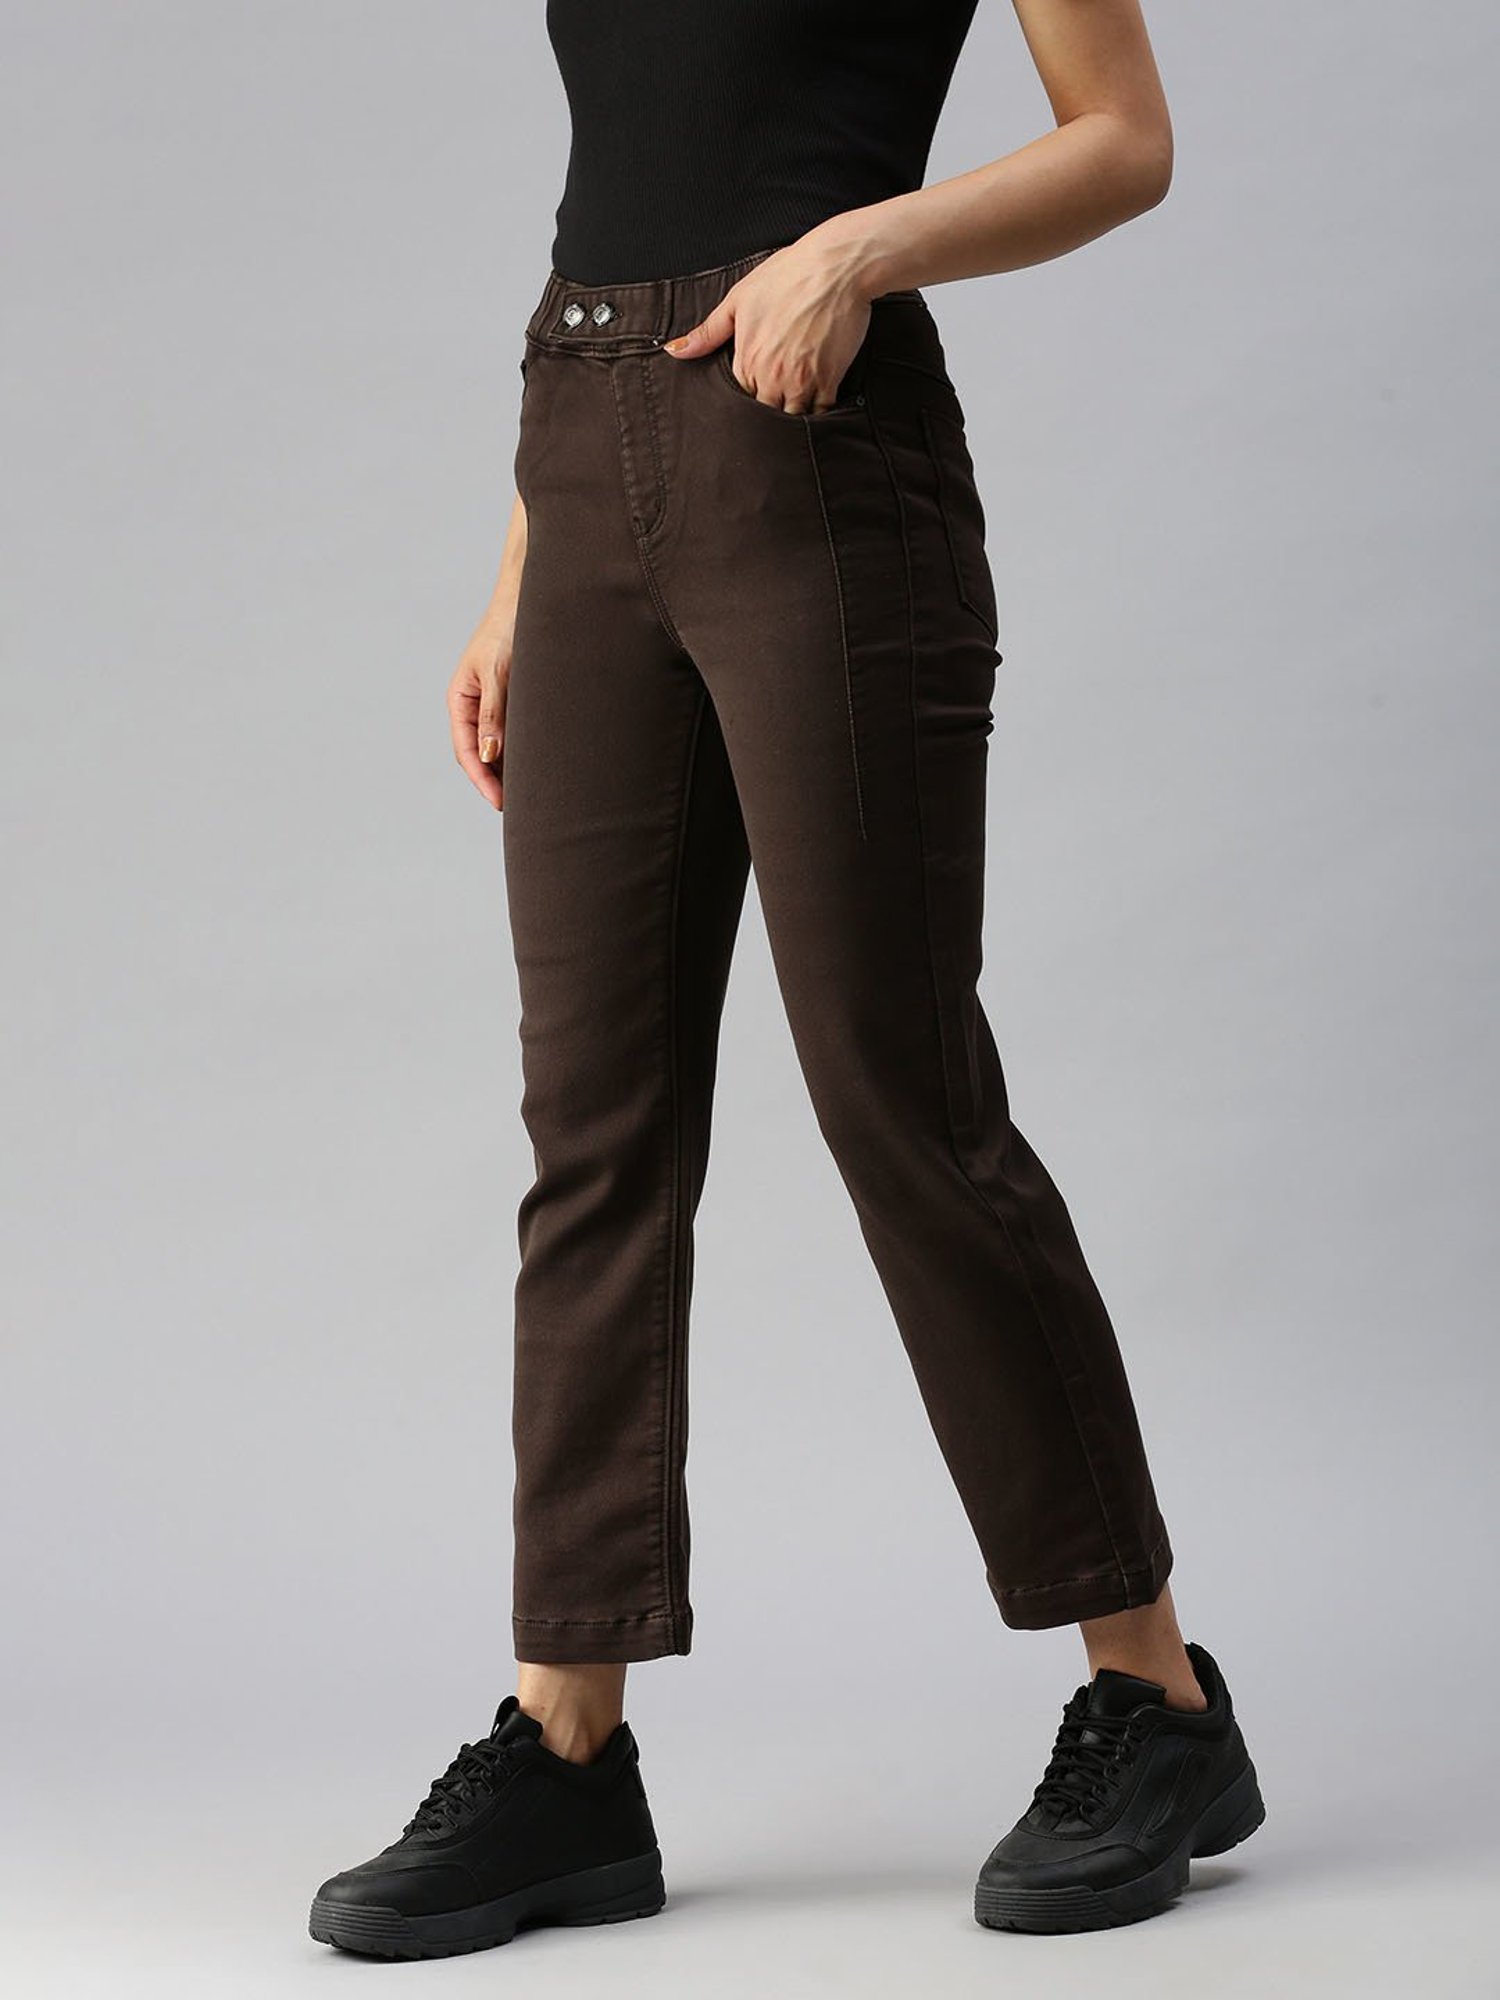 Buy Allen Solly Junior Boys Navy Slim Fit Solid Trousers online